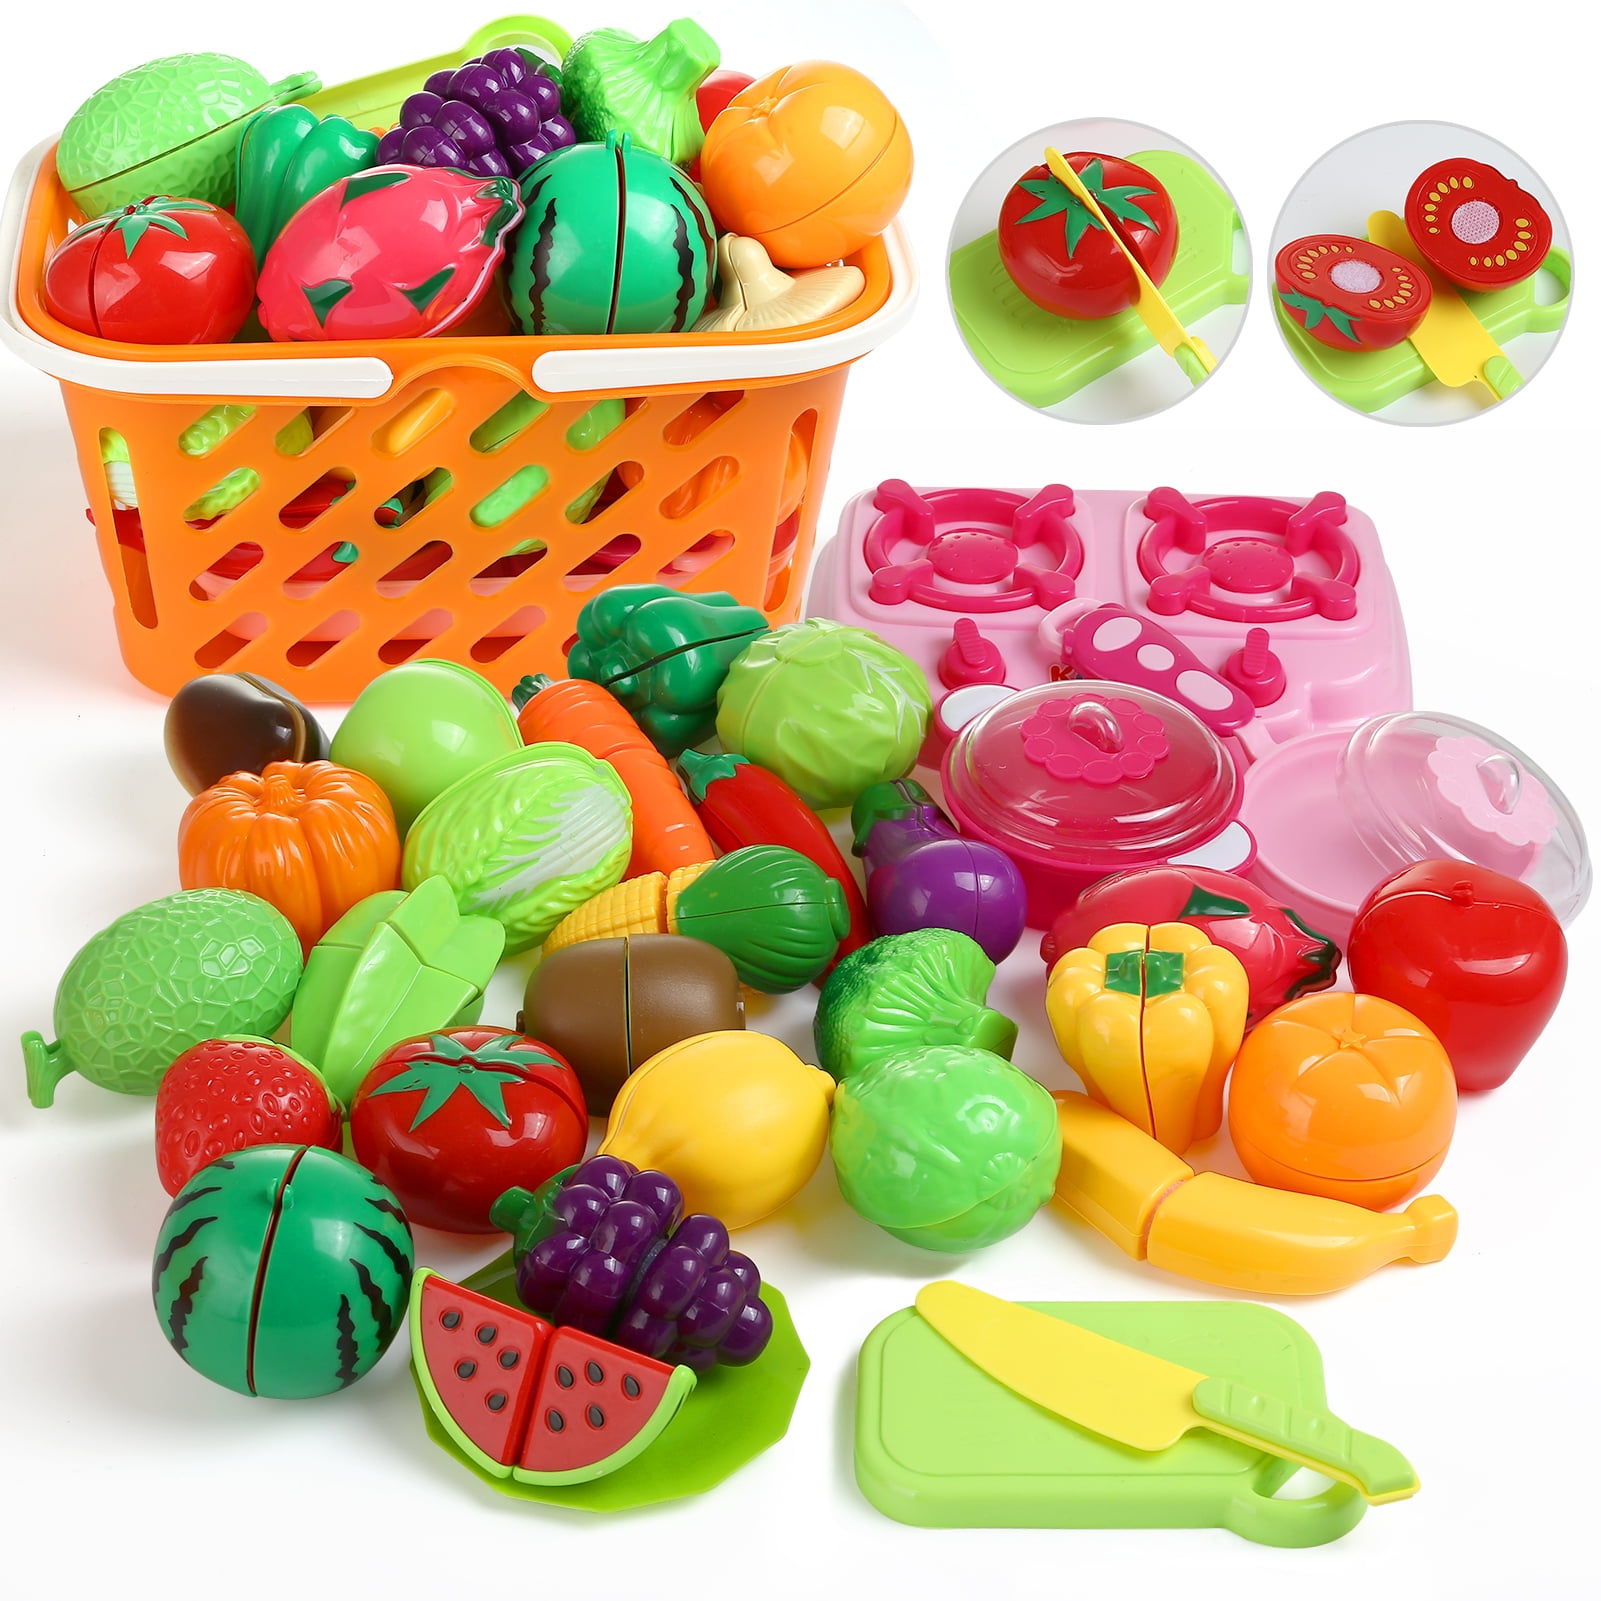 Naler 33 Pcs Kids Kitchen Fruit Vegetable Food Pretend Role Play ...